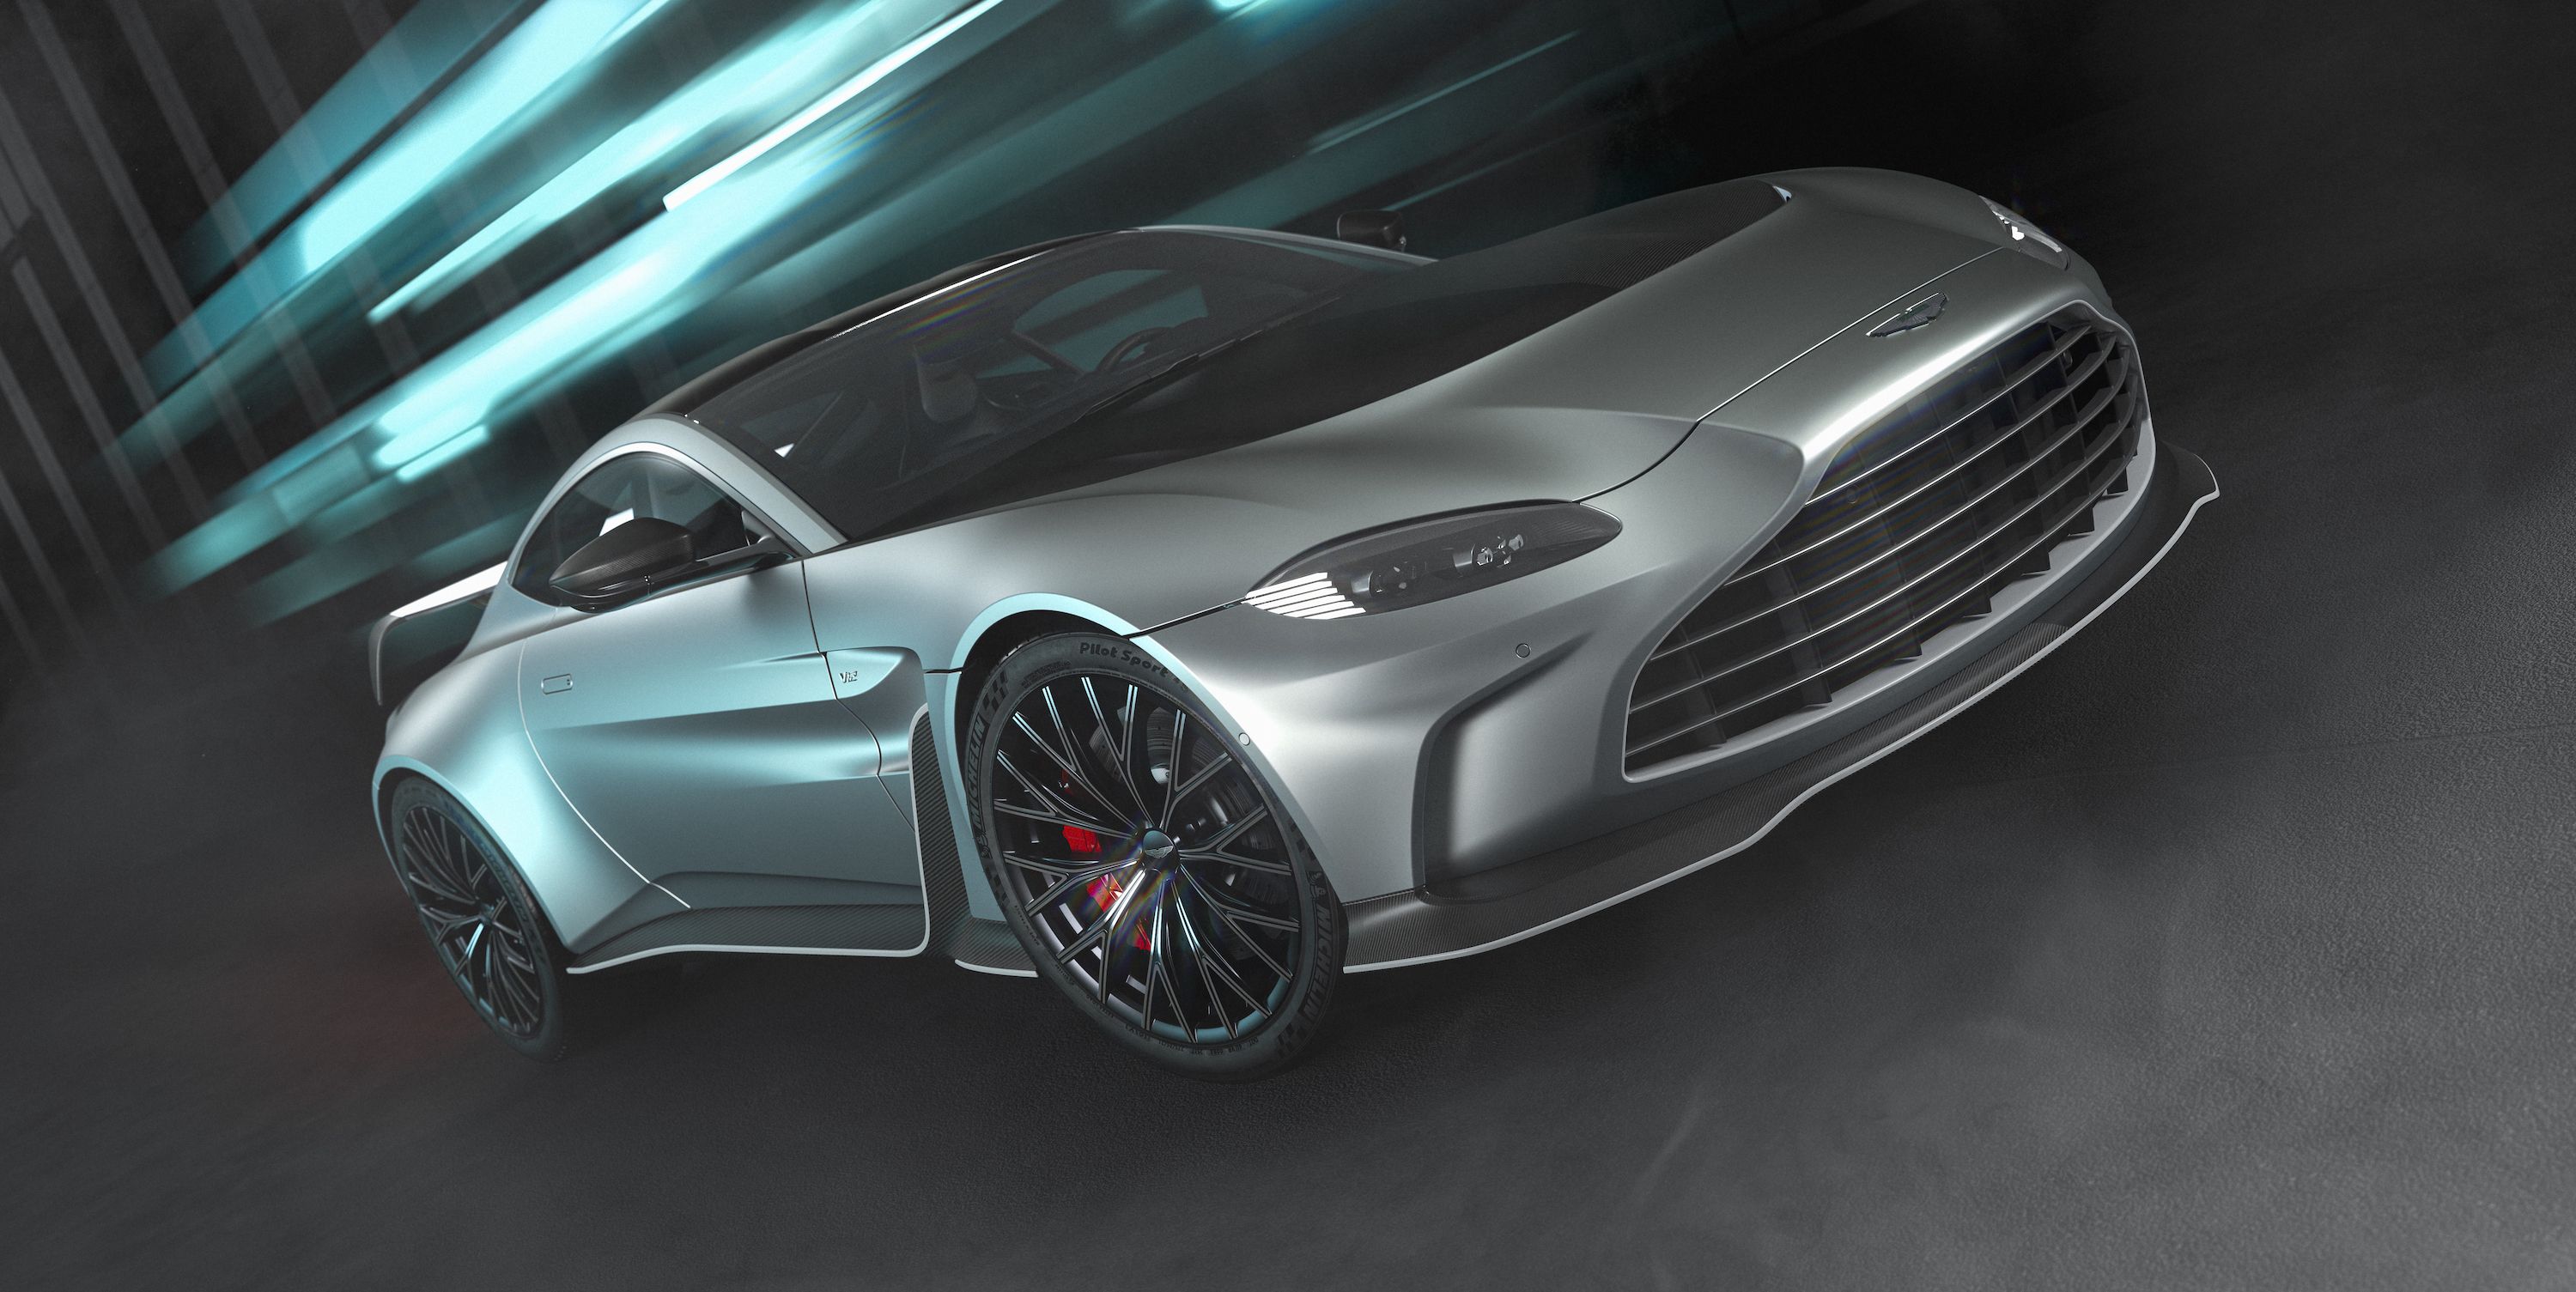 The 2022 Aston Martin V12 Vantage Gets 690 HP But No Manual Transmission